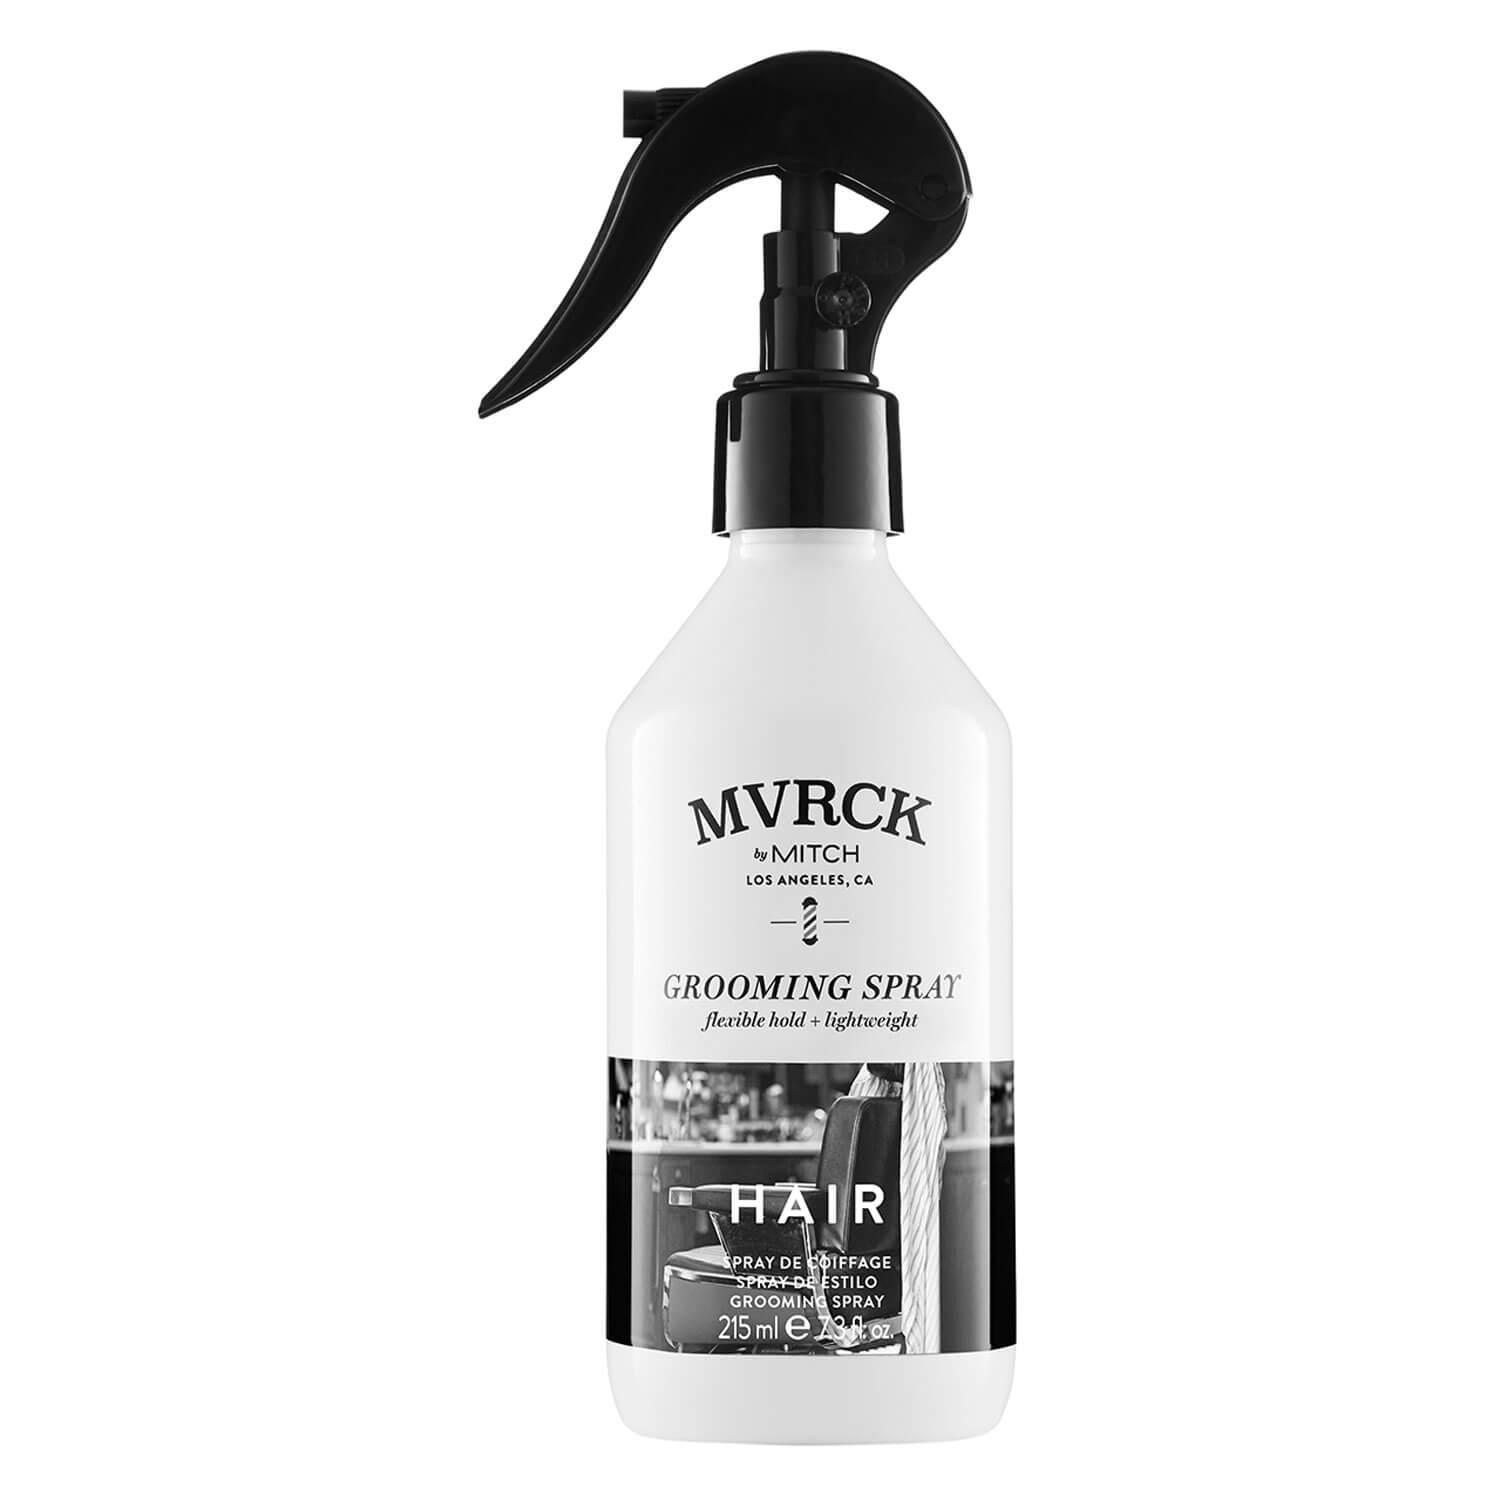 MVRCK - Grooming Spray